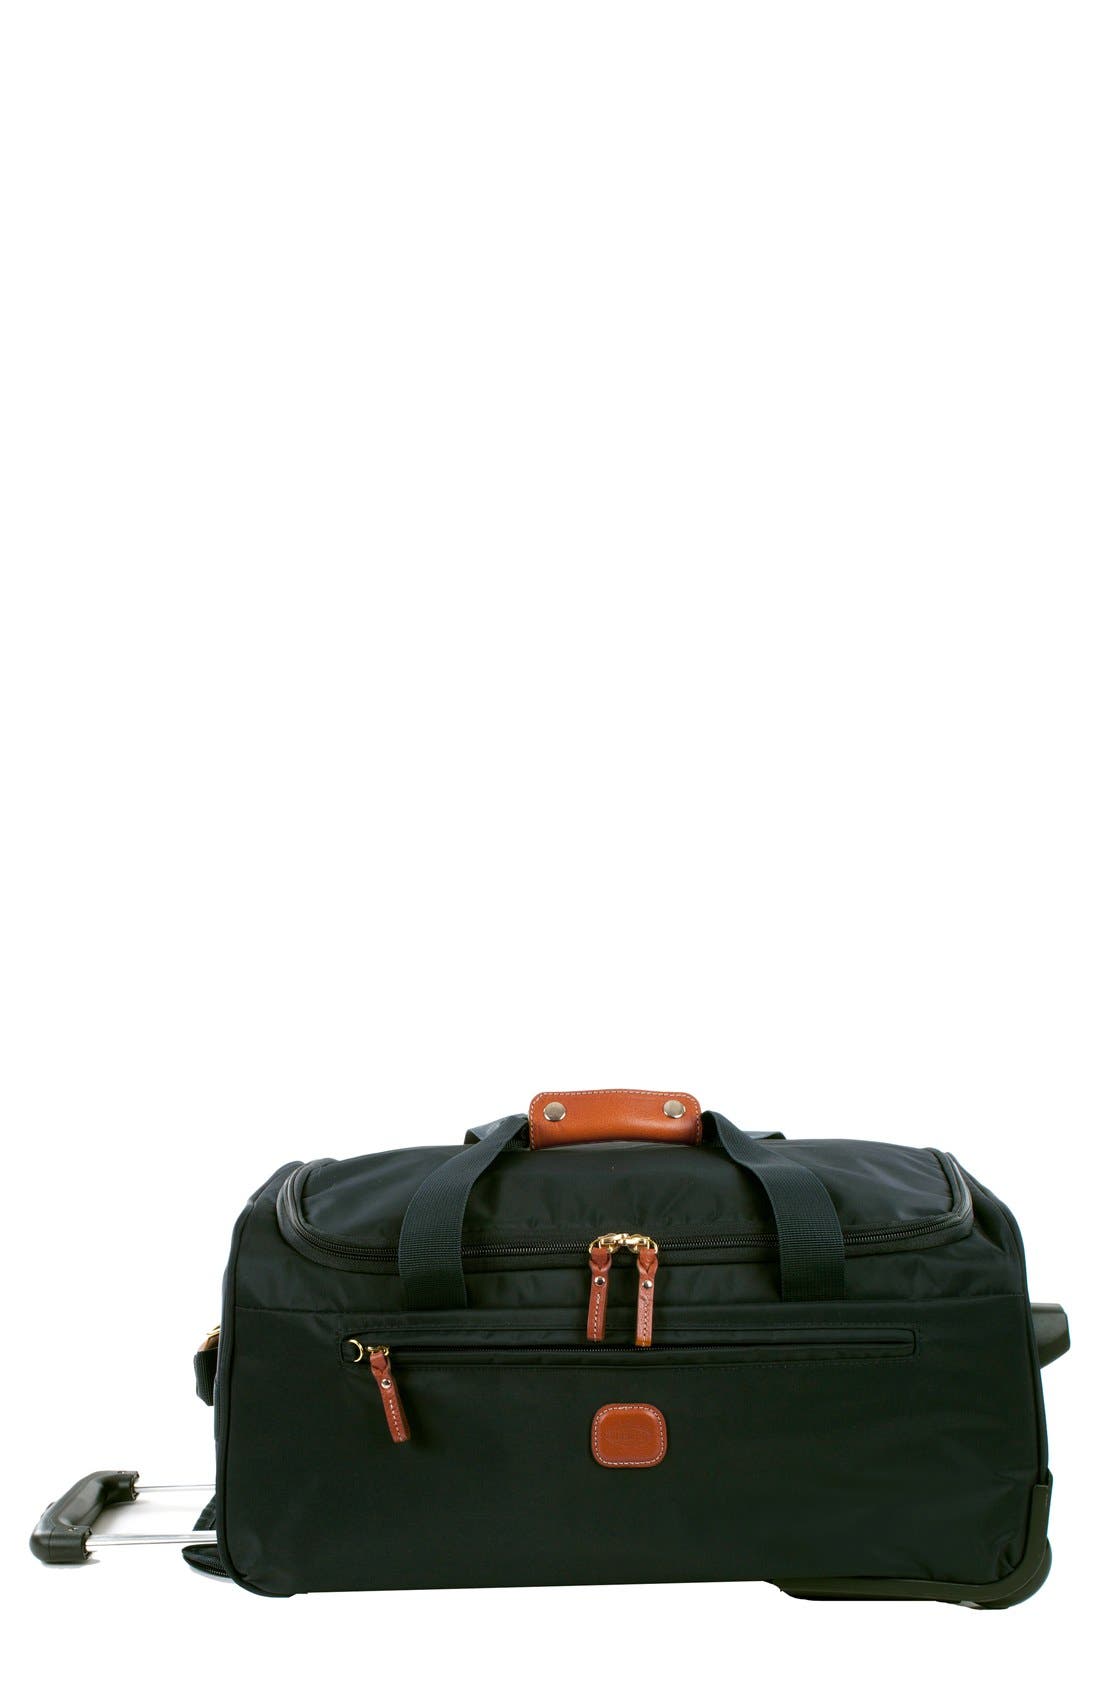 Brics Luggage X Bag 21 Inch Carry On Rolling Duffle